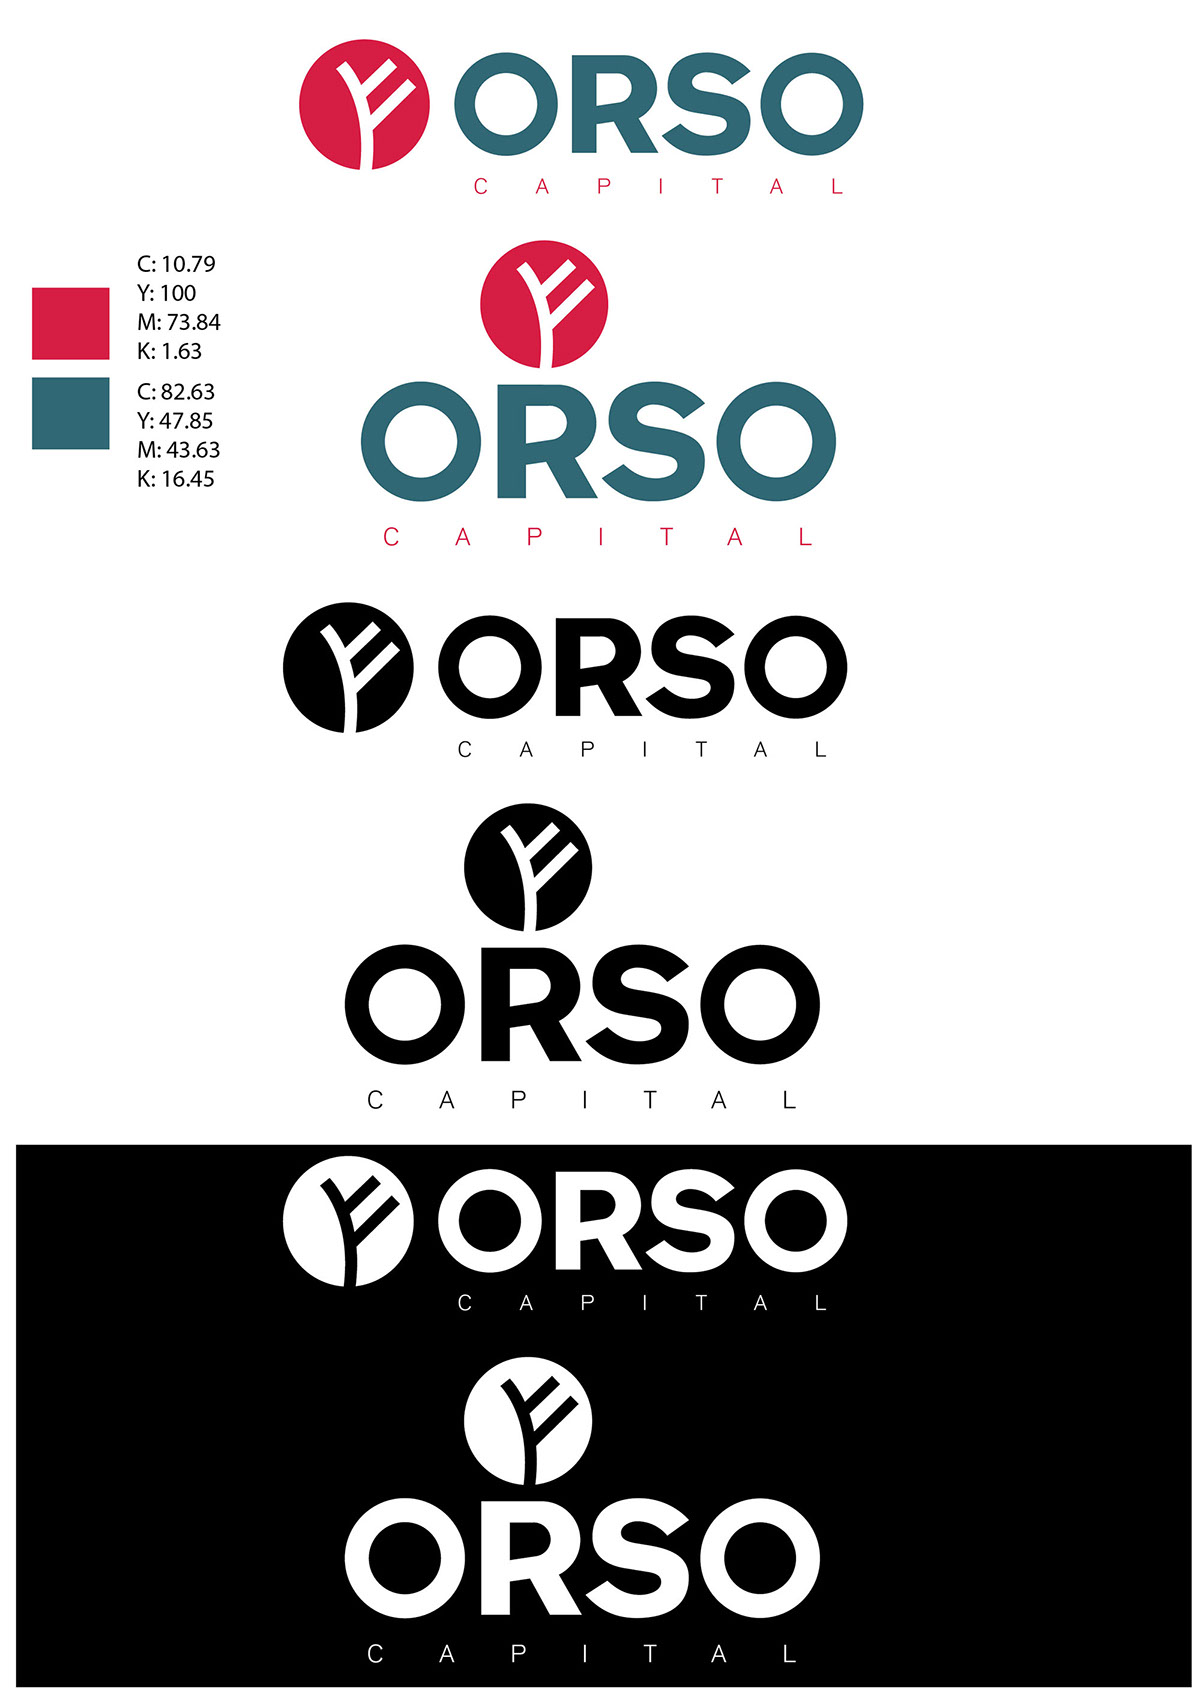 ORSO bear Russia Global finance Capital Investment Nature Scandinavia